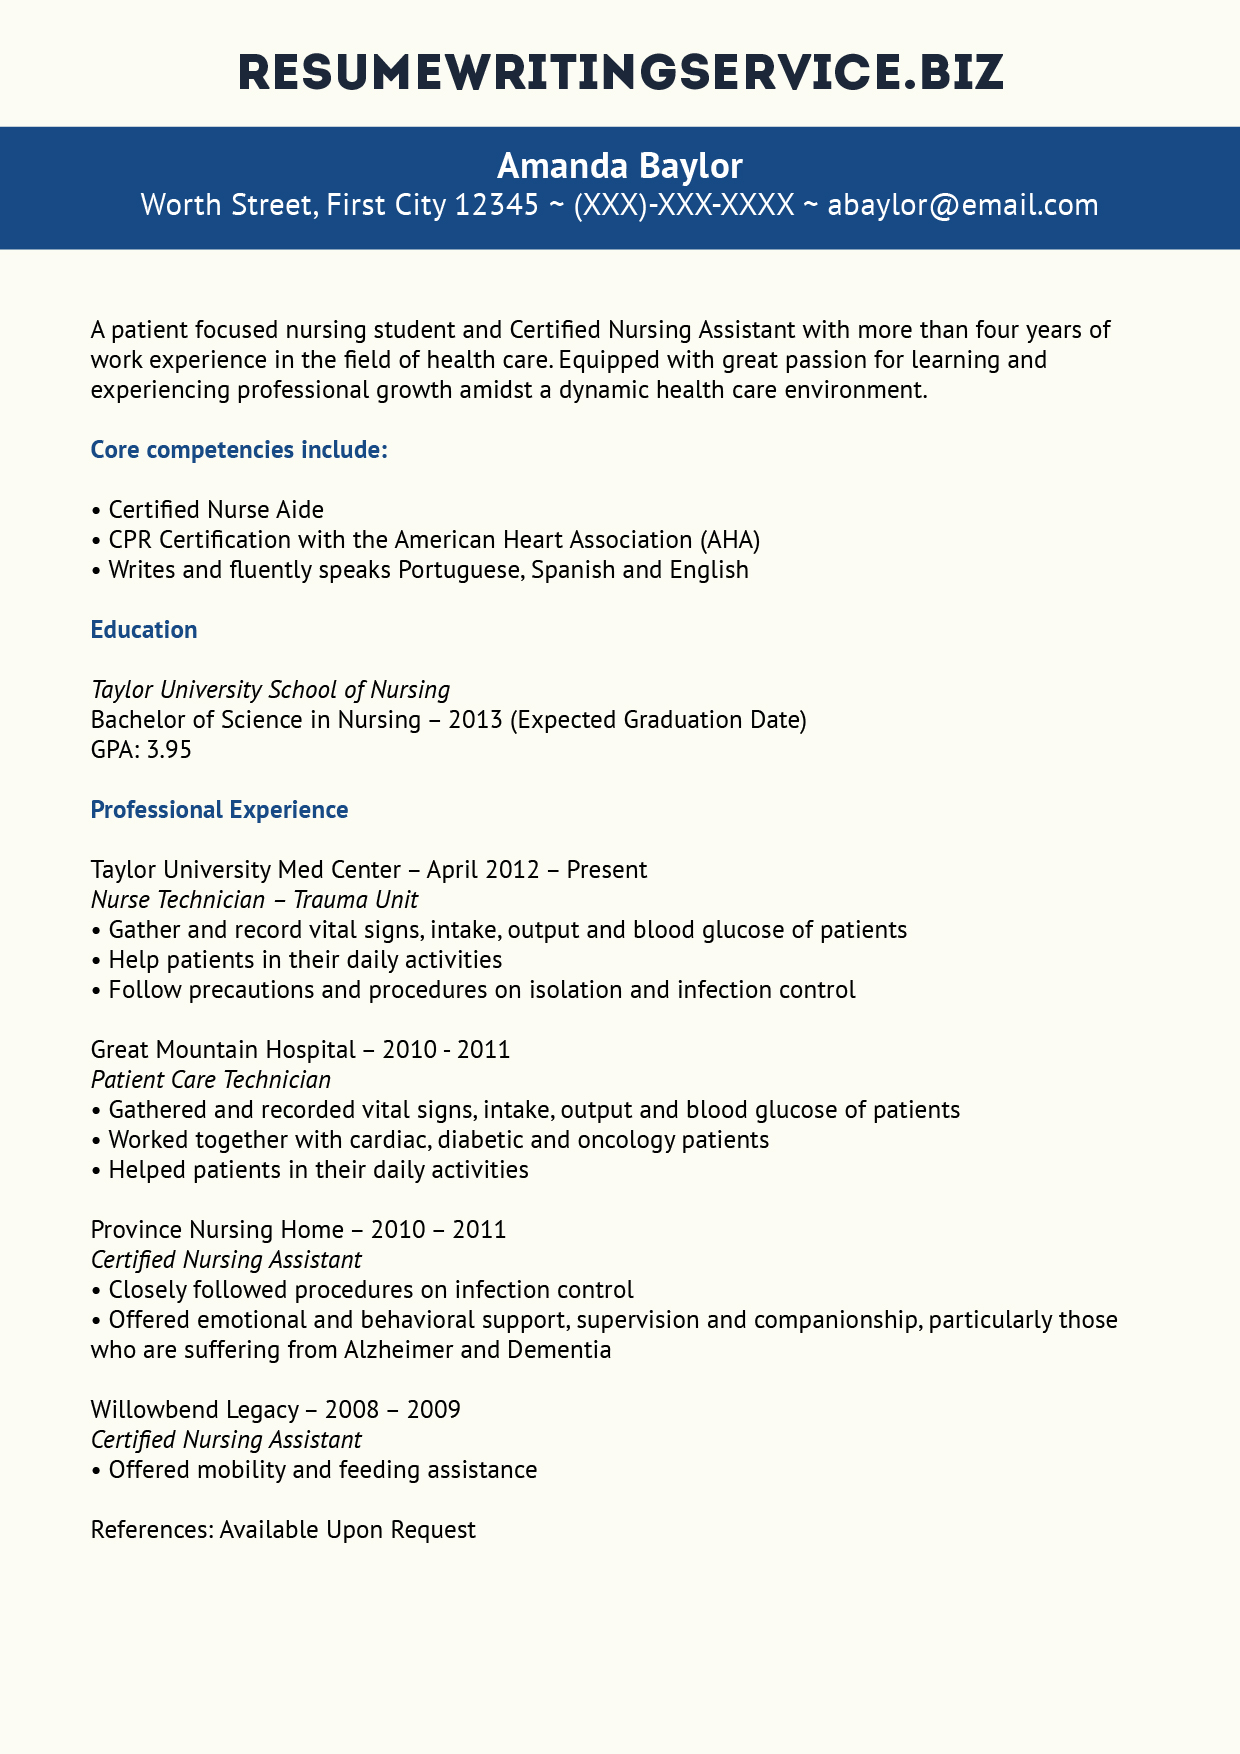 resume-template-for-nursing-student